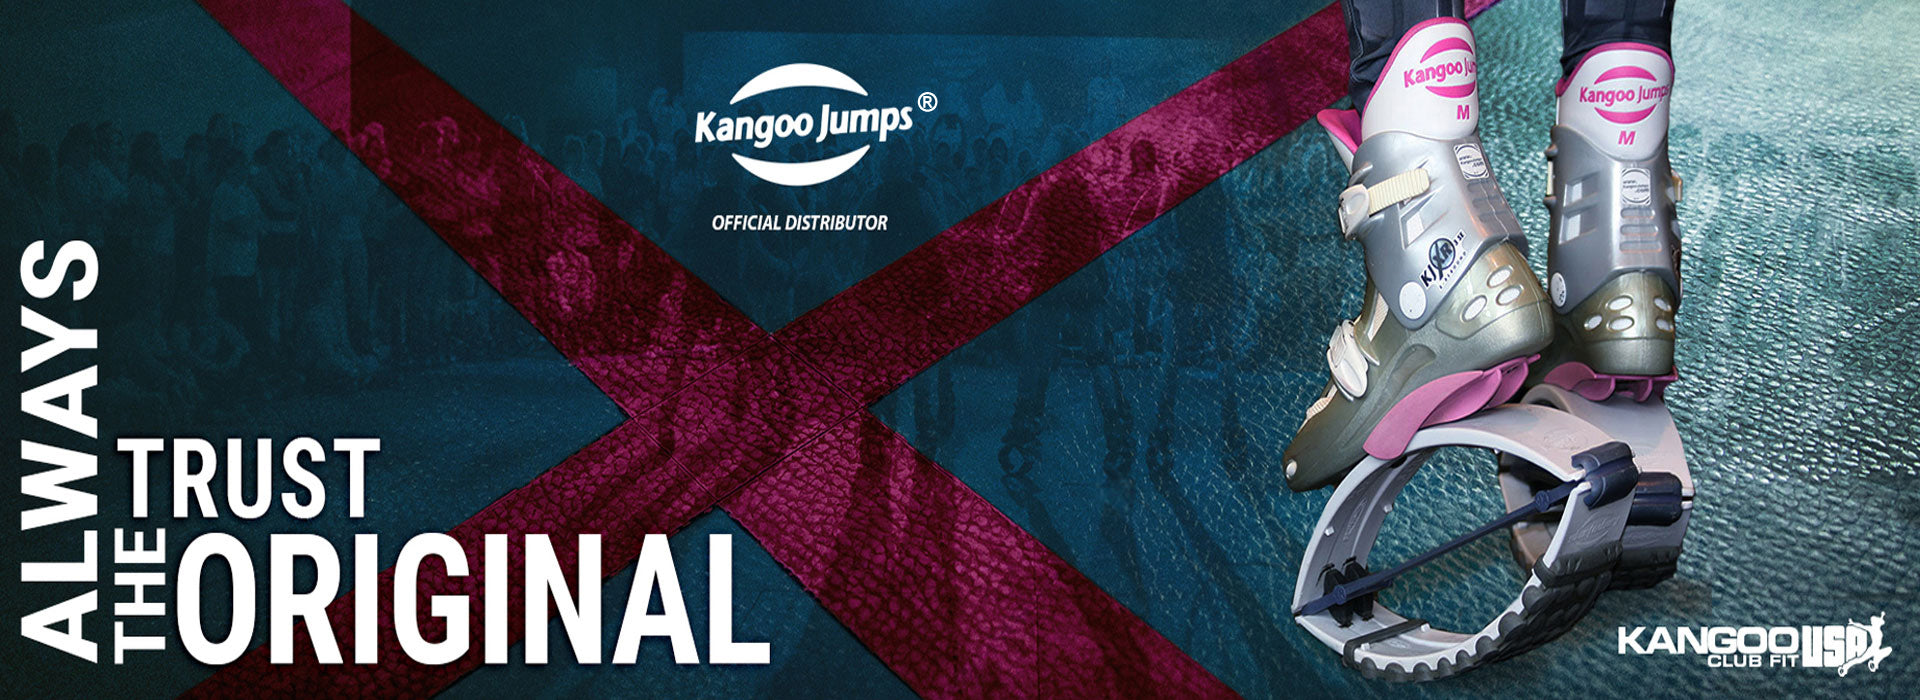 Kangoo Boots-Shoes Workout Jumps Gen I Series Red White – kangooboots